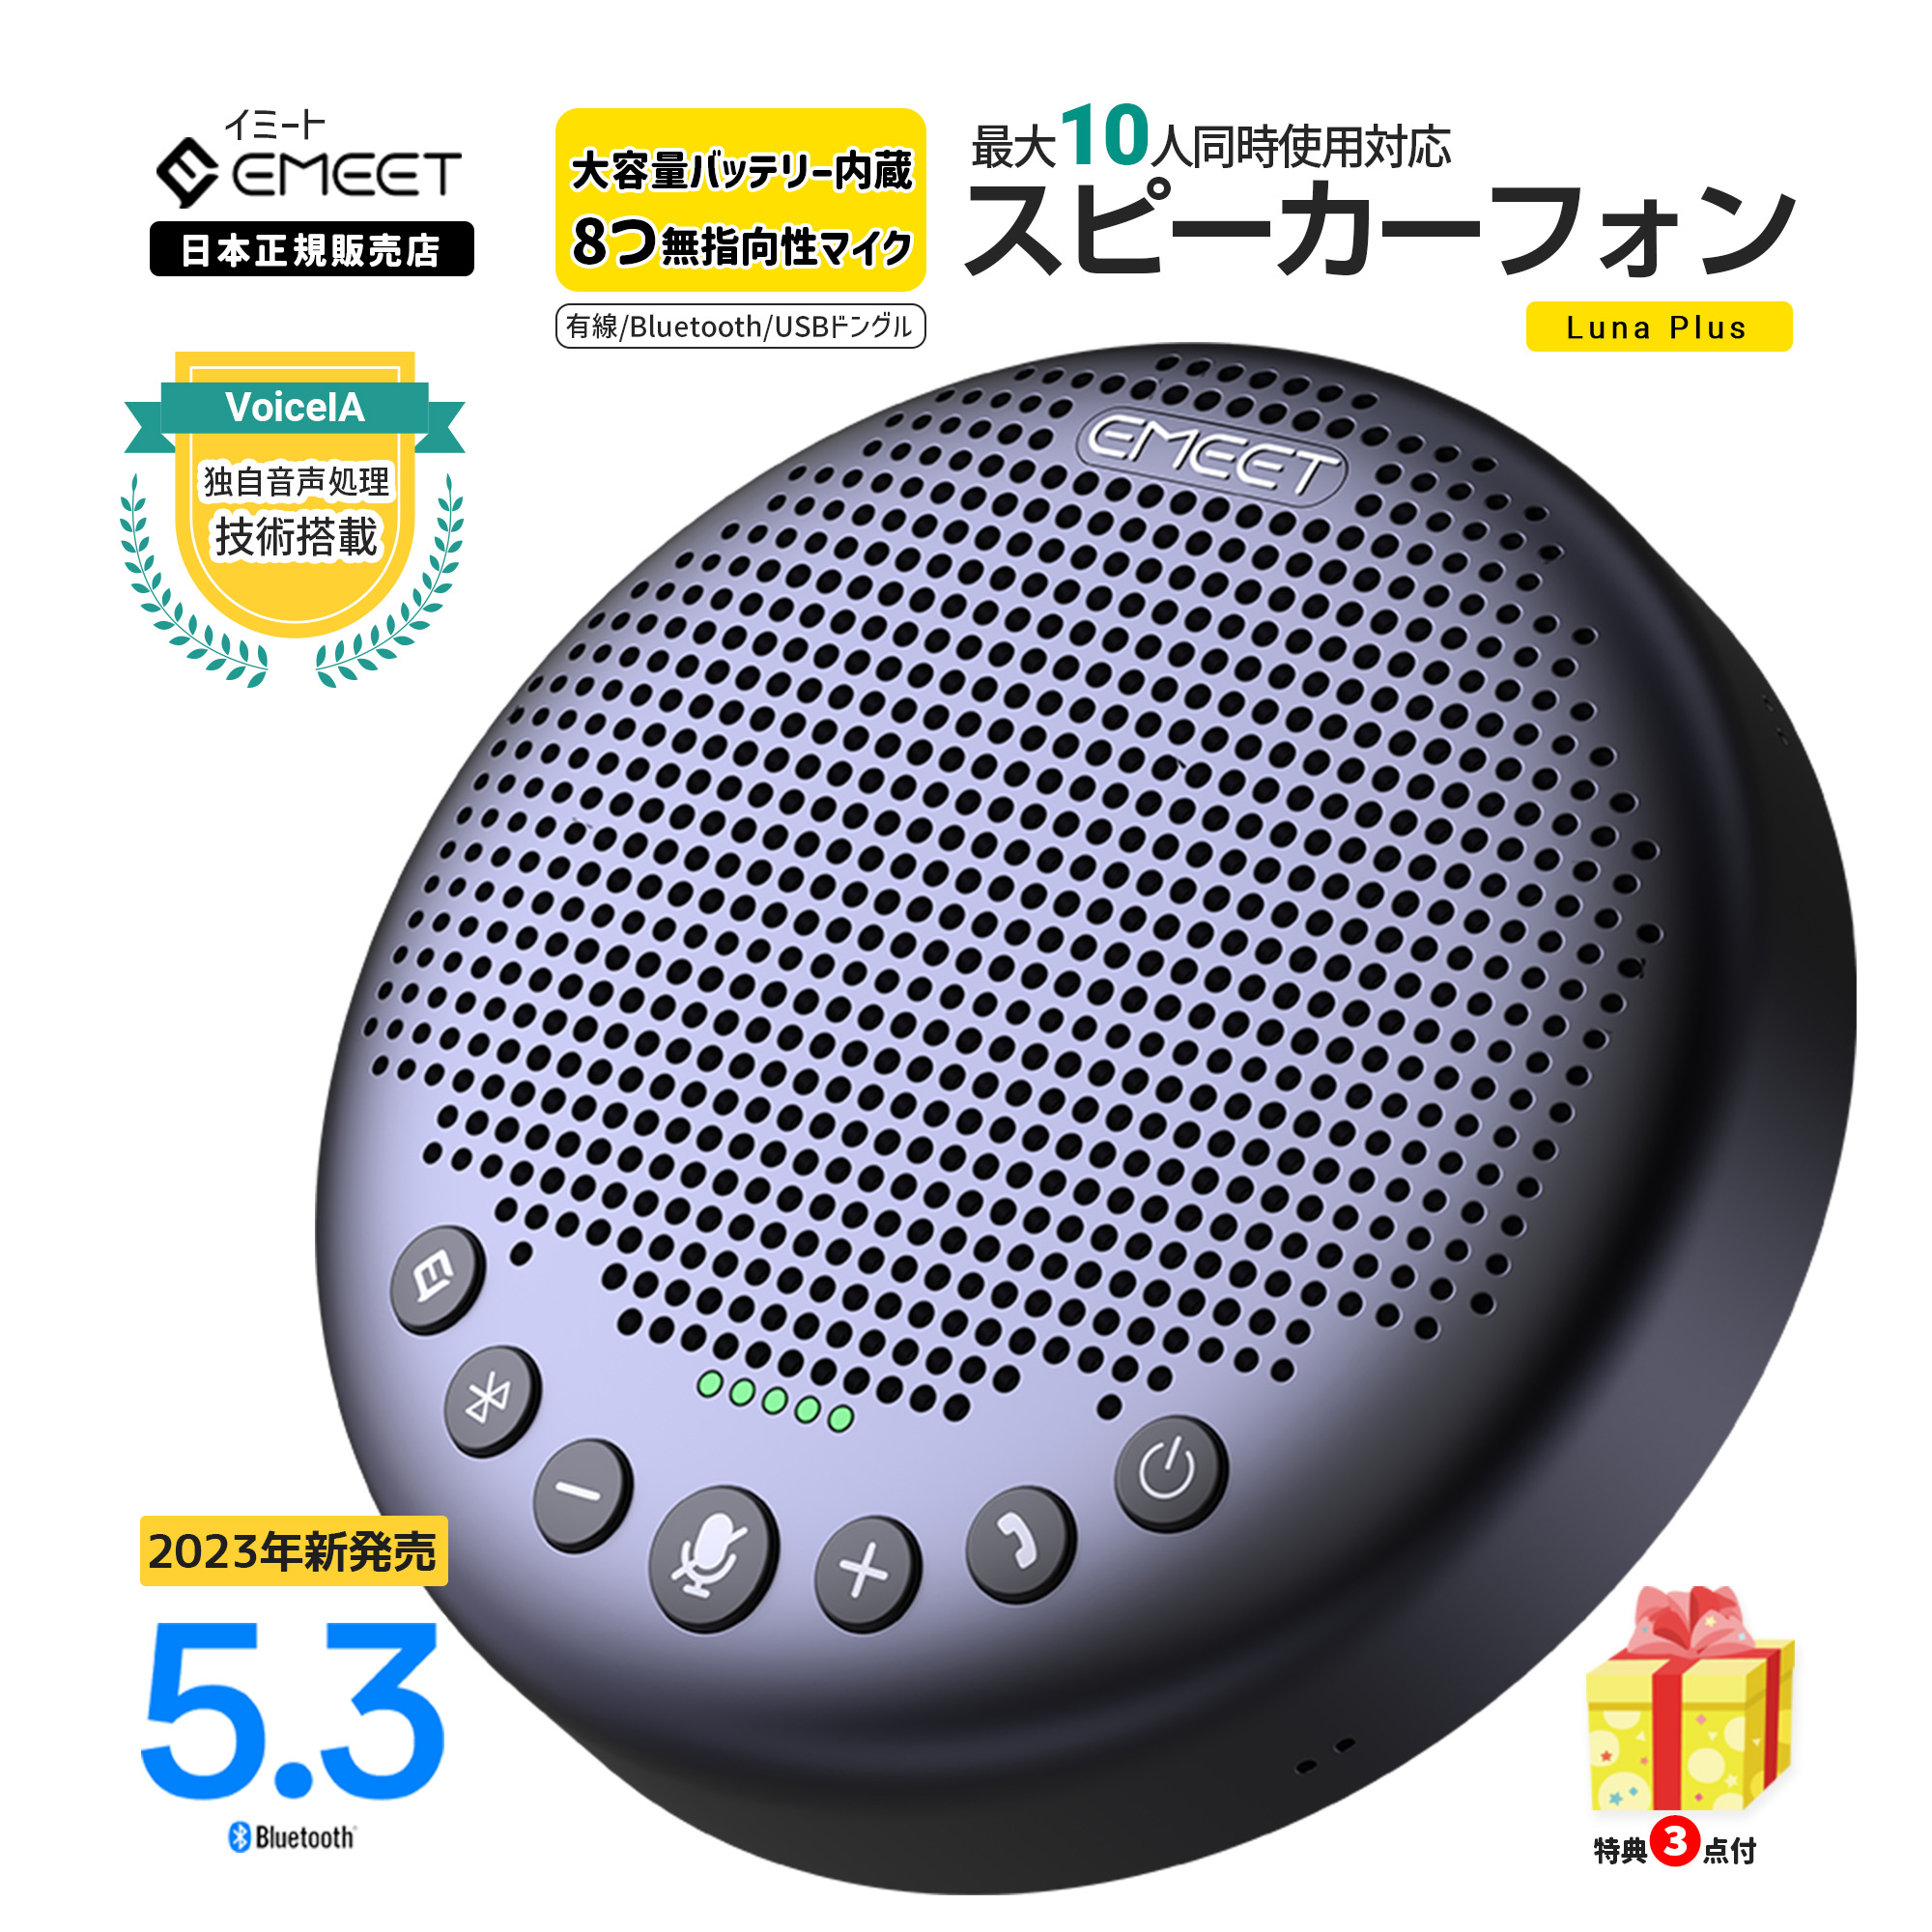 EMEET【日本正規品】 Emeet Luna Plus スピーカーフォン 8つ 360度 無指向性 マイク エコーキャンセリング ノイズリダクション Bluetooth5.3 ワイヤレ